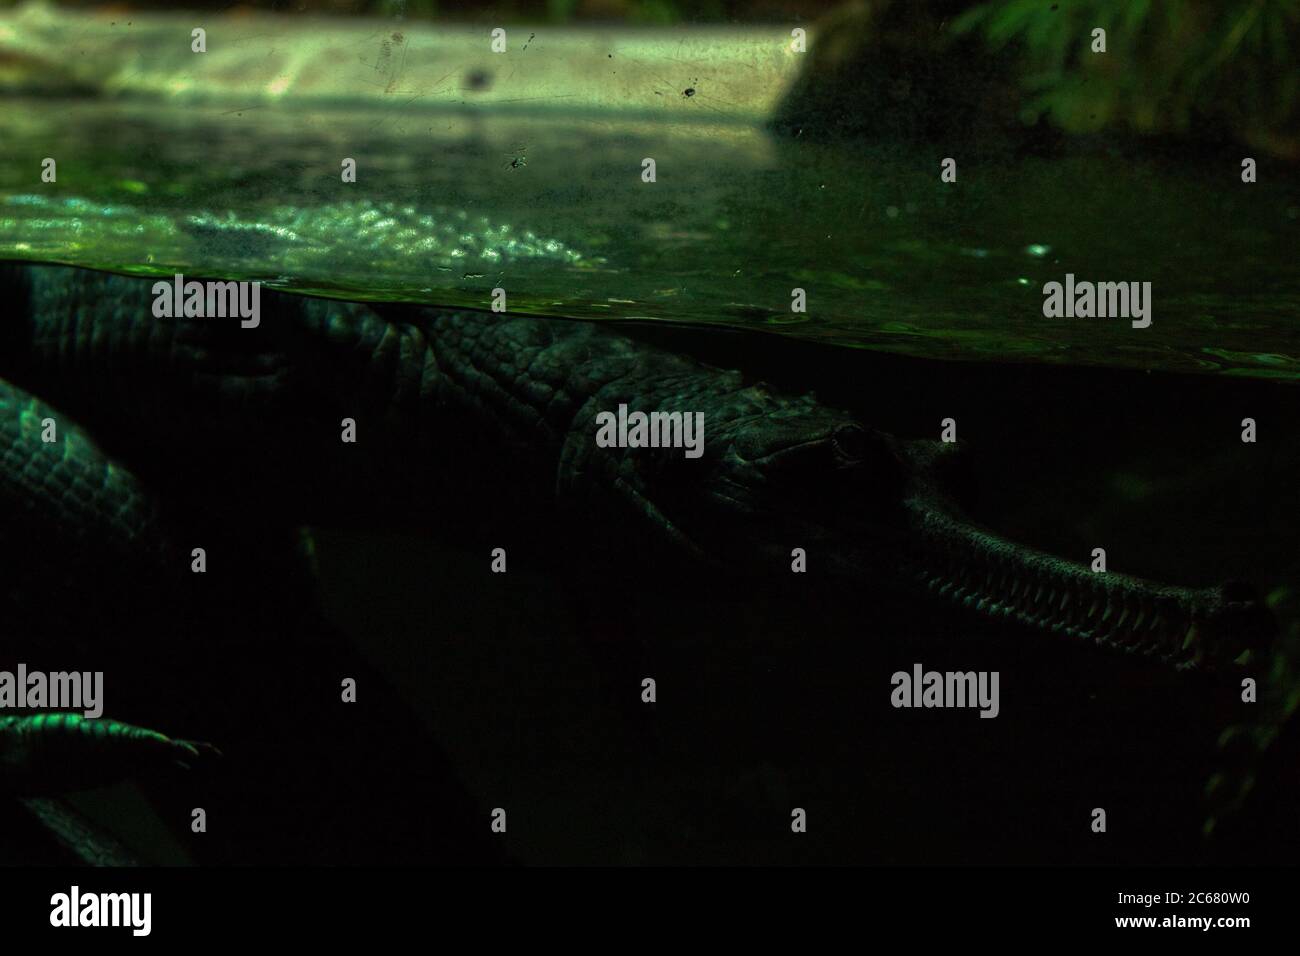 gavial crocodile under water in aquarium close up Stock Photo